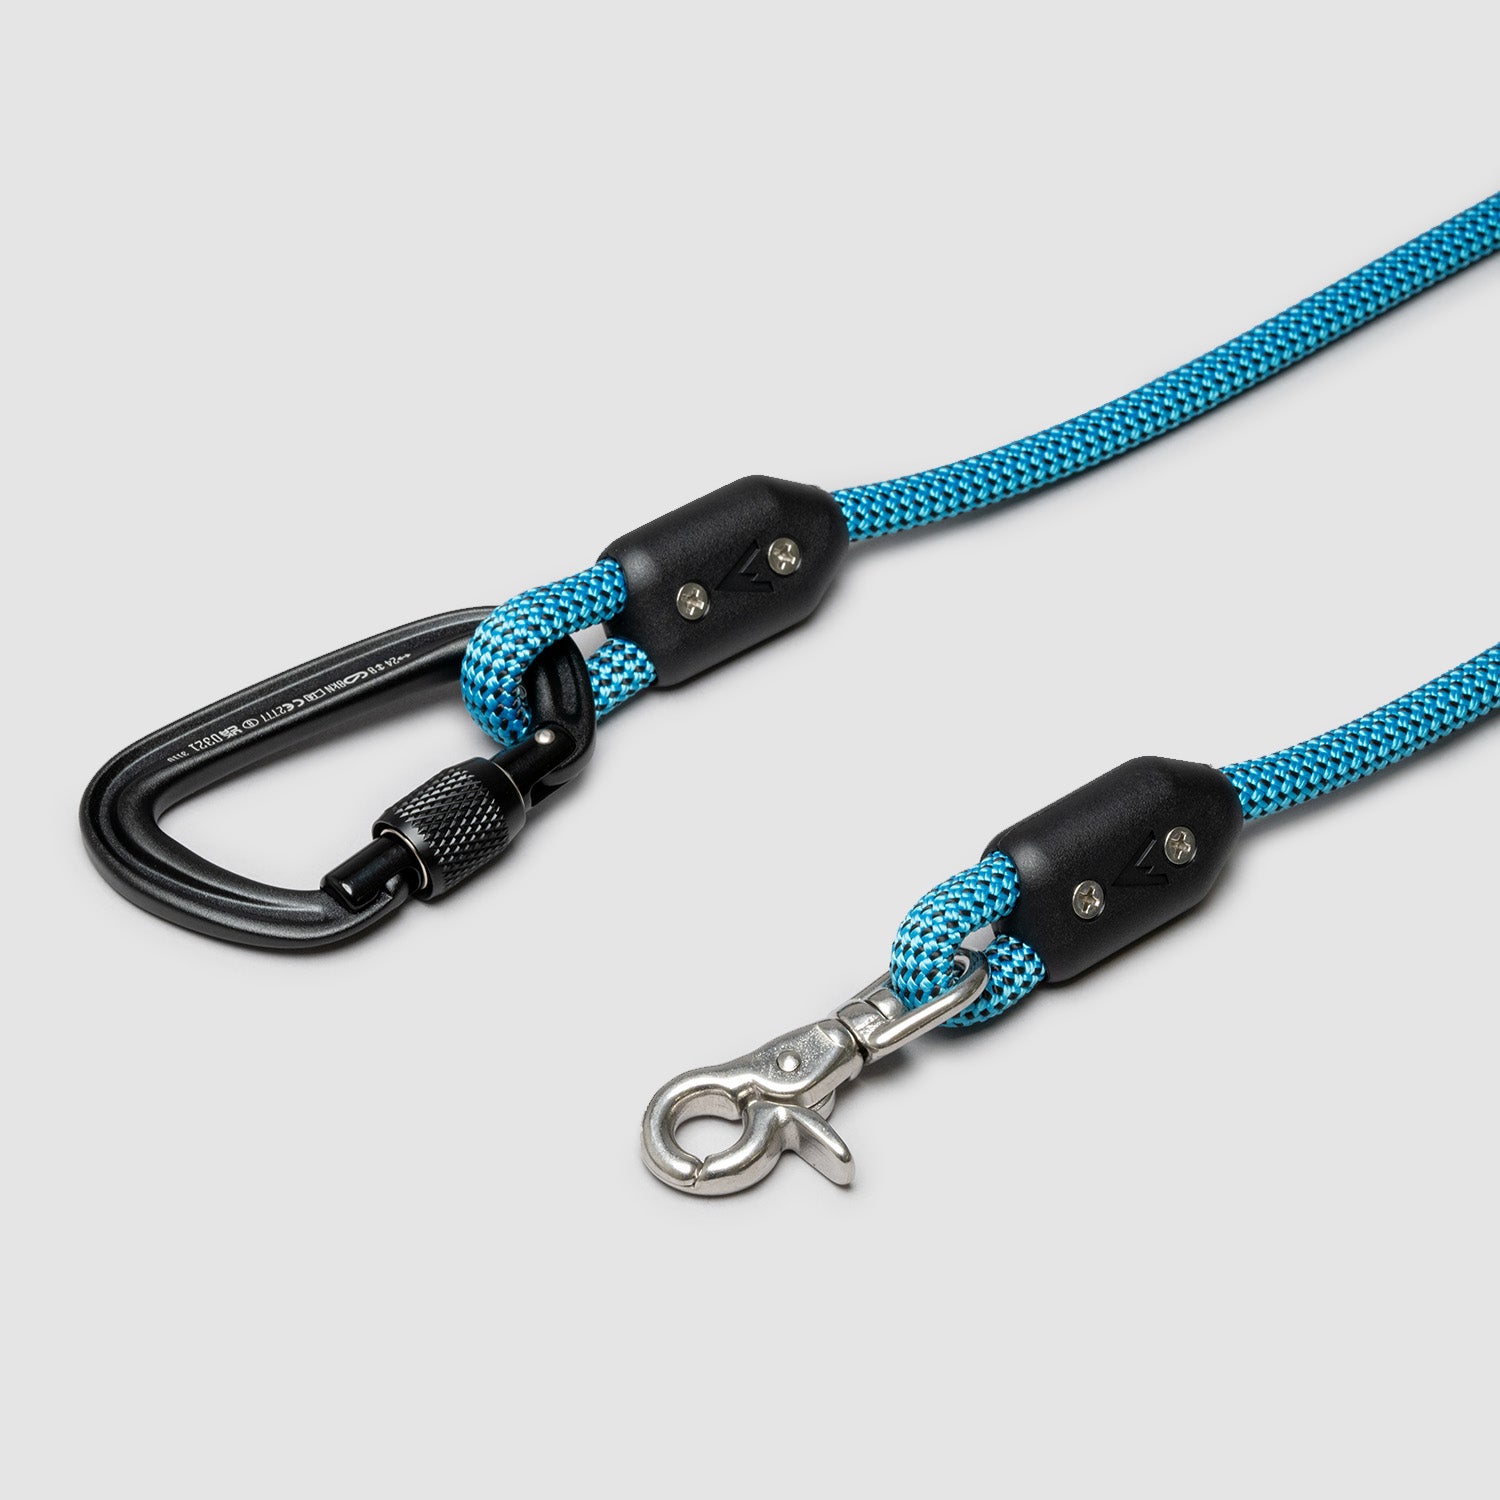 atlas pet company lifetime leash climbing rope lifetime warranty dog leash --glacier